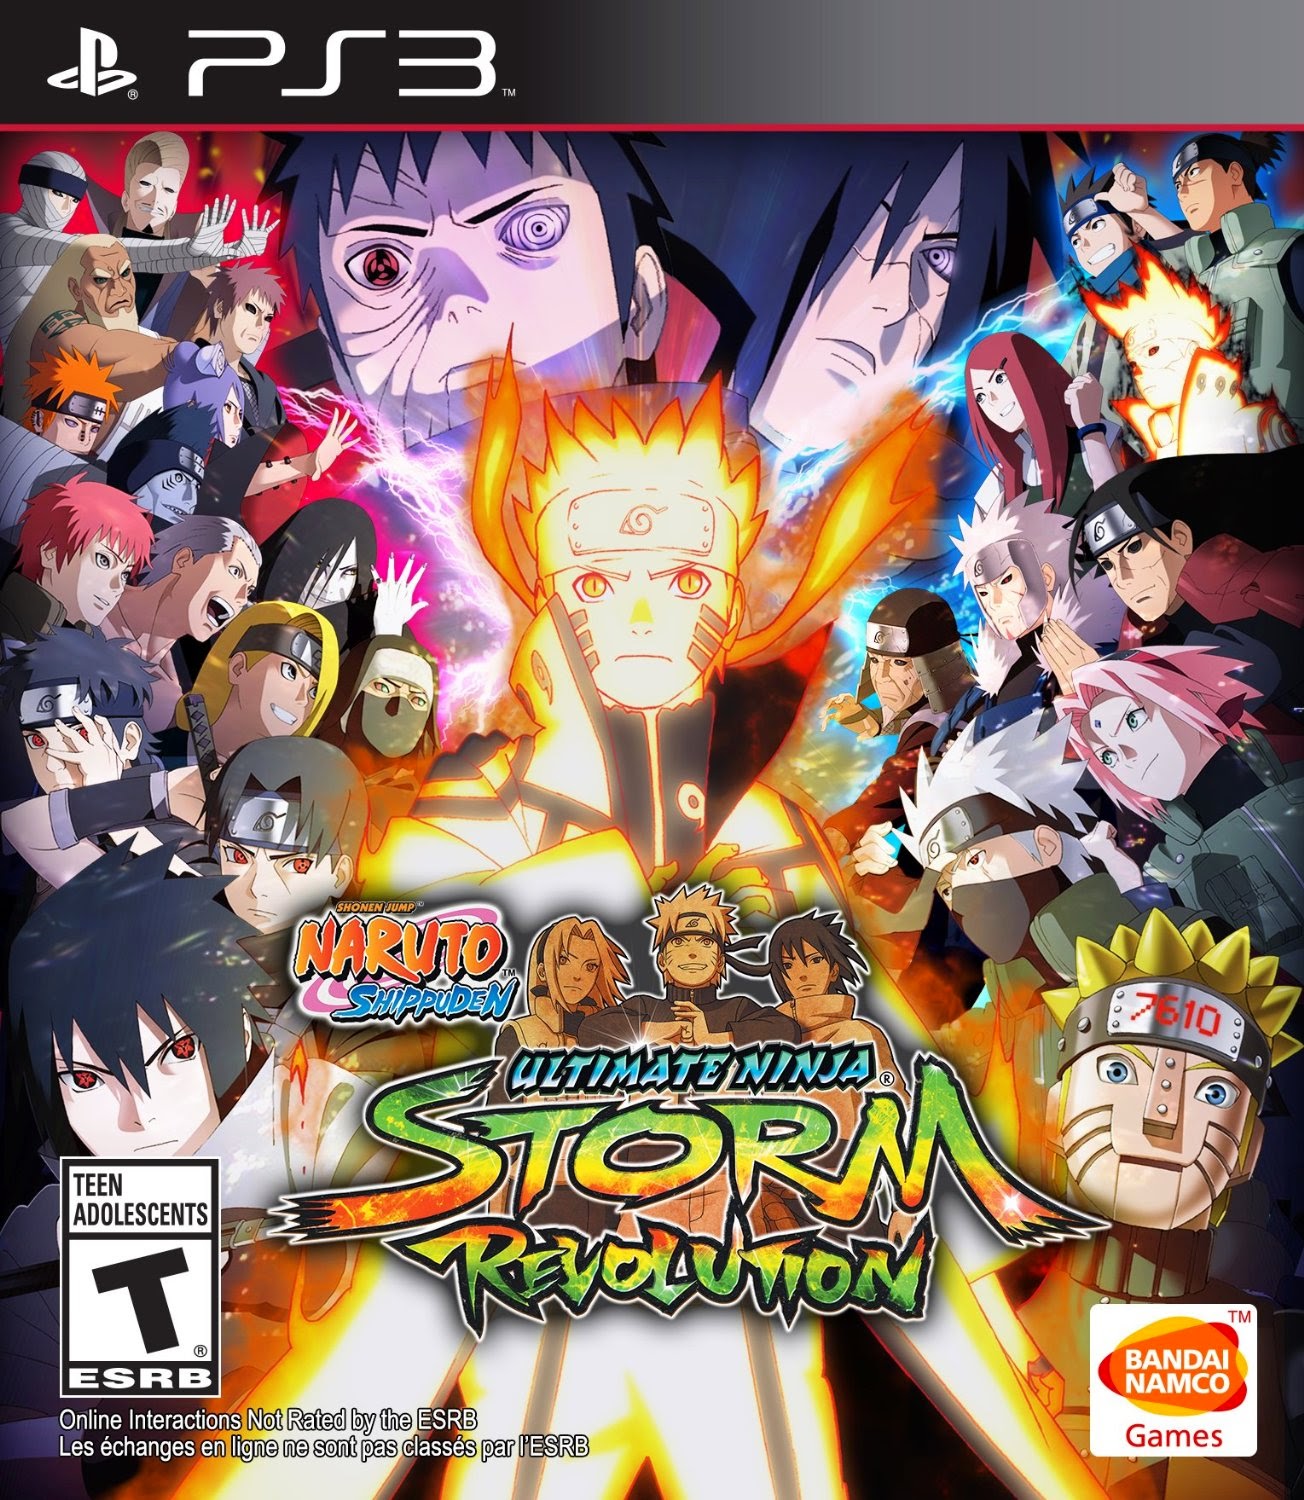 Download Game Naruto Shippuden Ultimate Ninja Storm Revolution Full